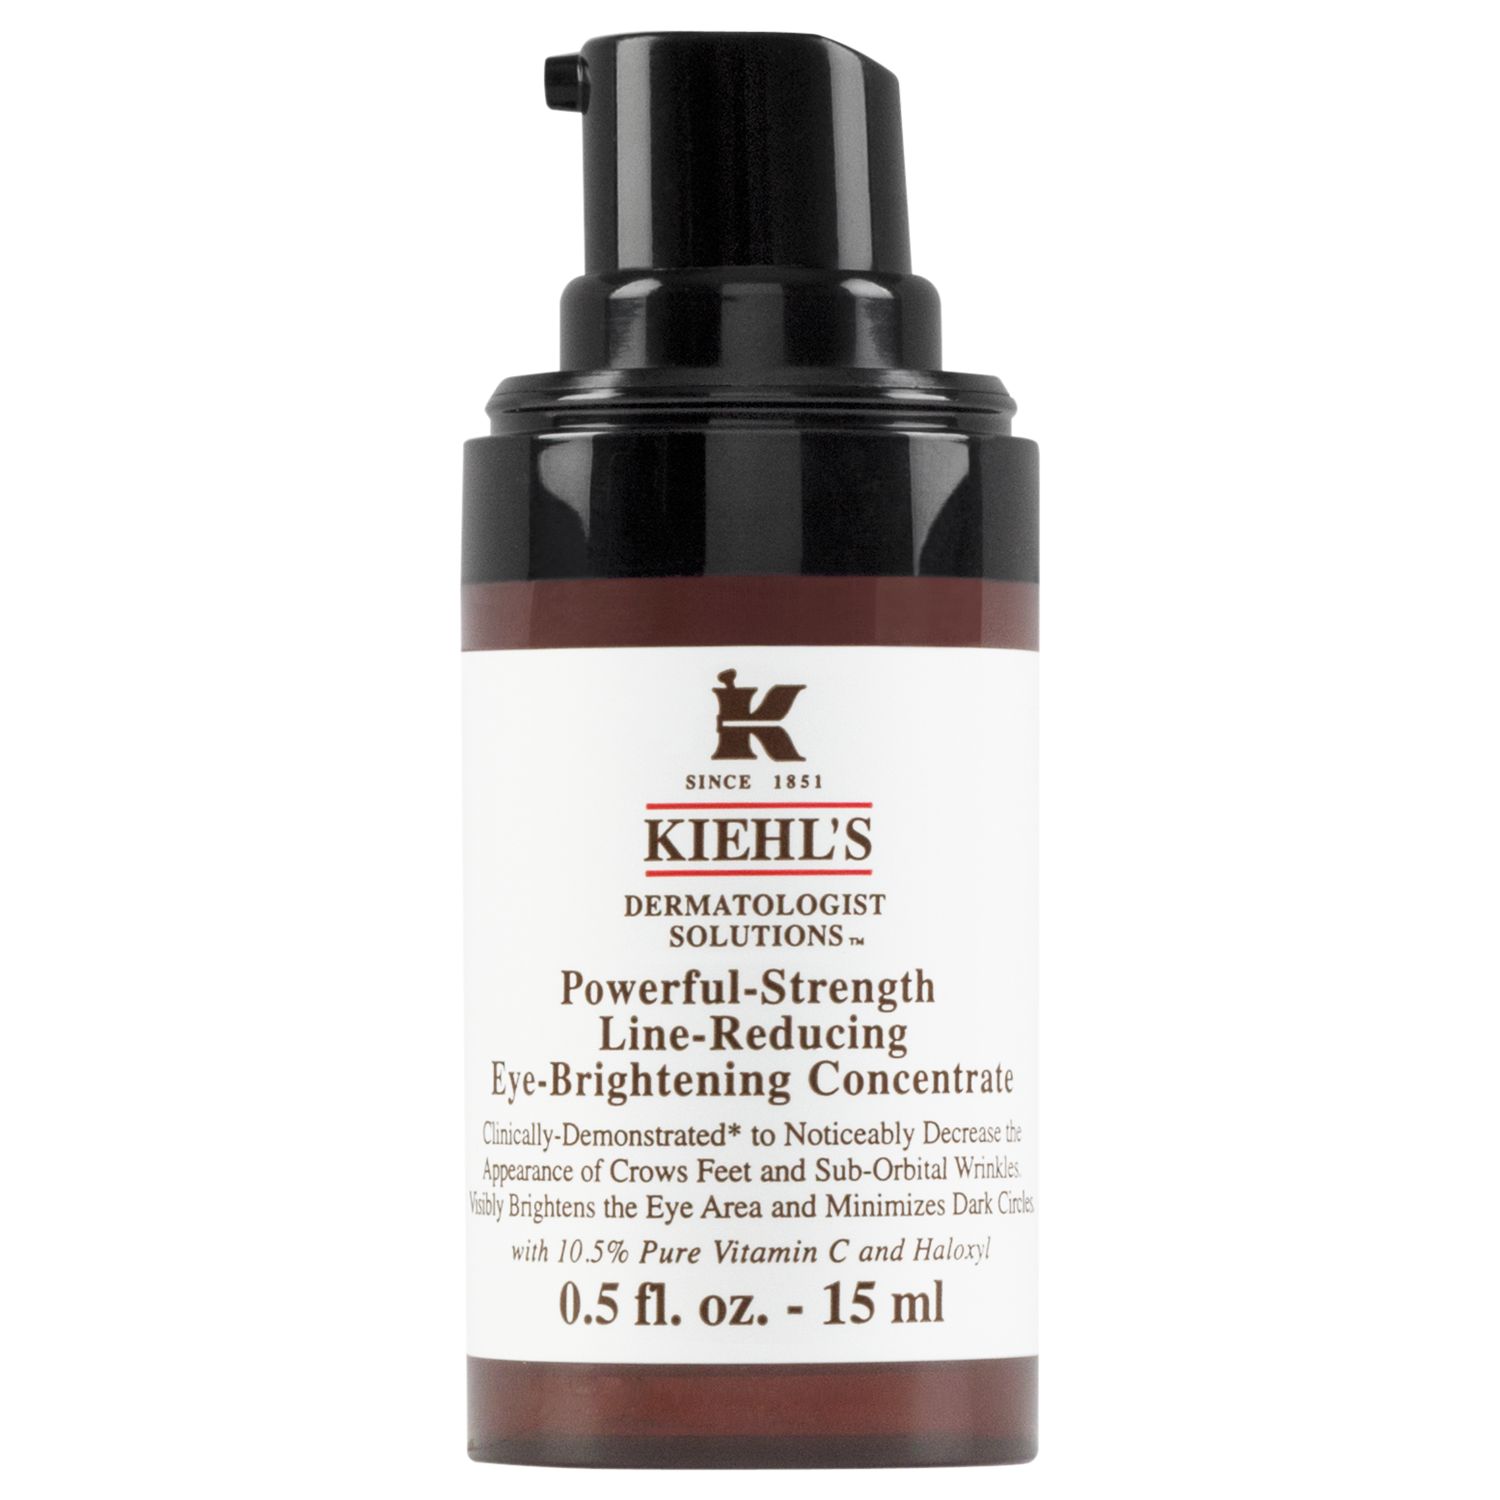 Kiehl's Powerful-Strength Line-Reducing Eye-Brightening Concentrate Eye Cream, 15ml